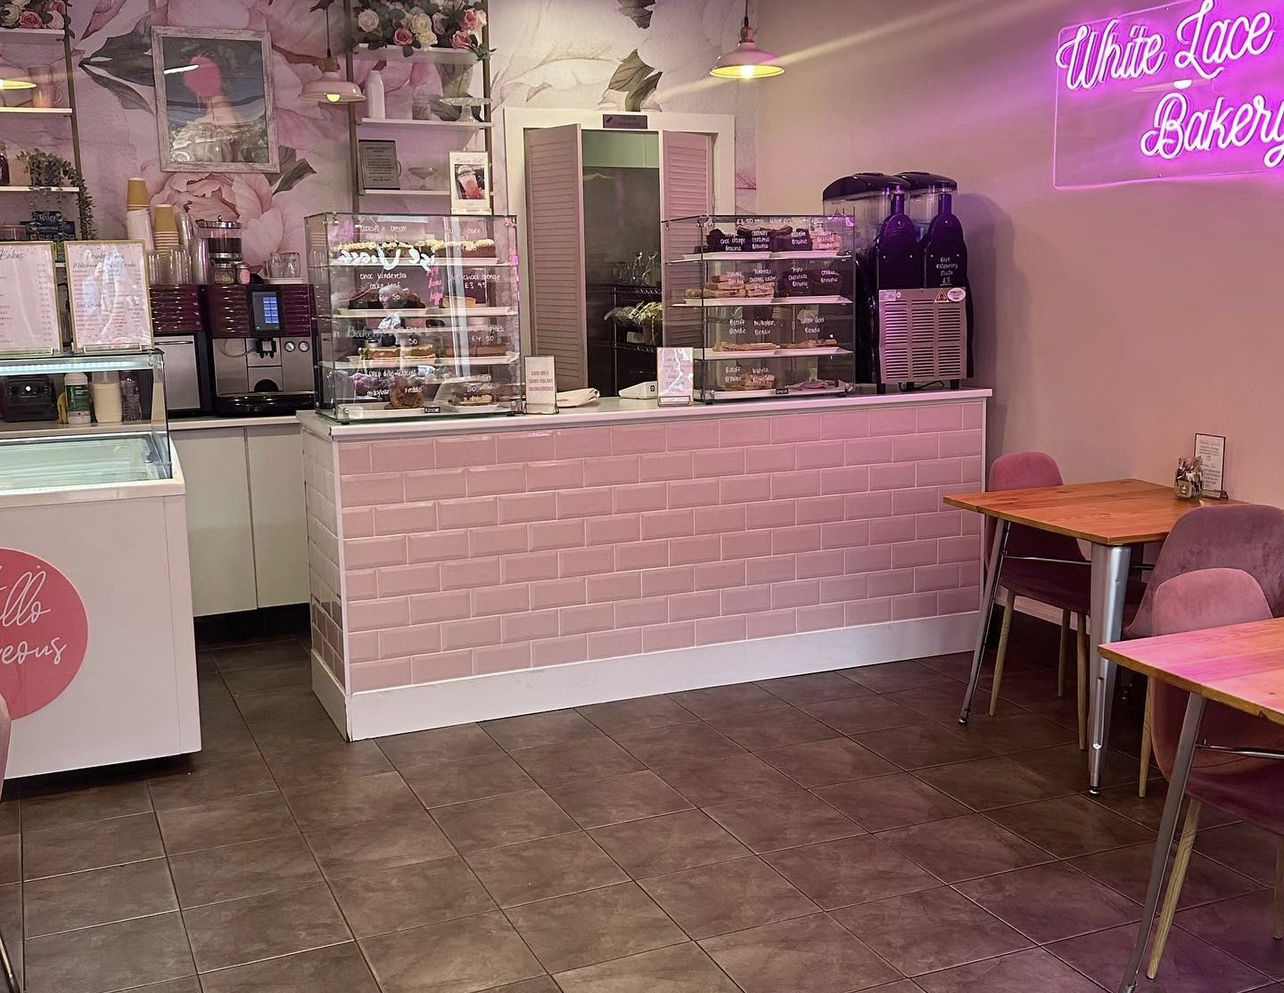 Customers like to take photos inside the pink shop